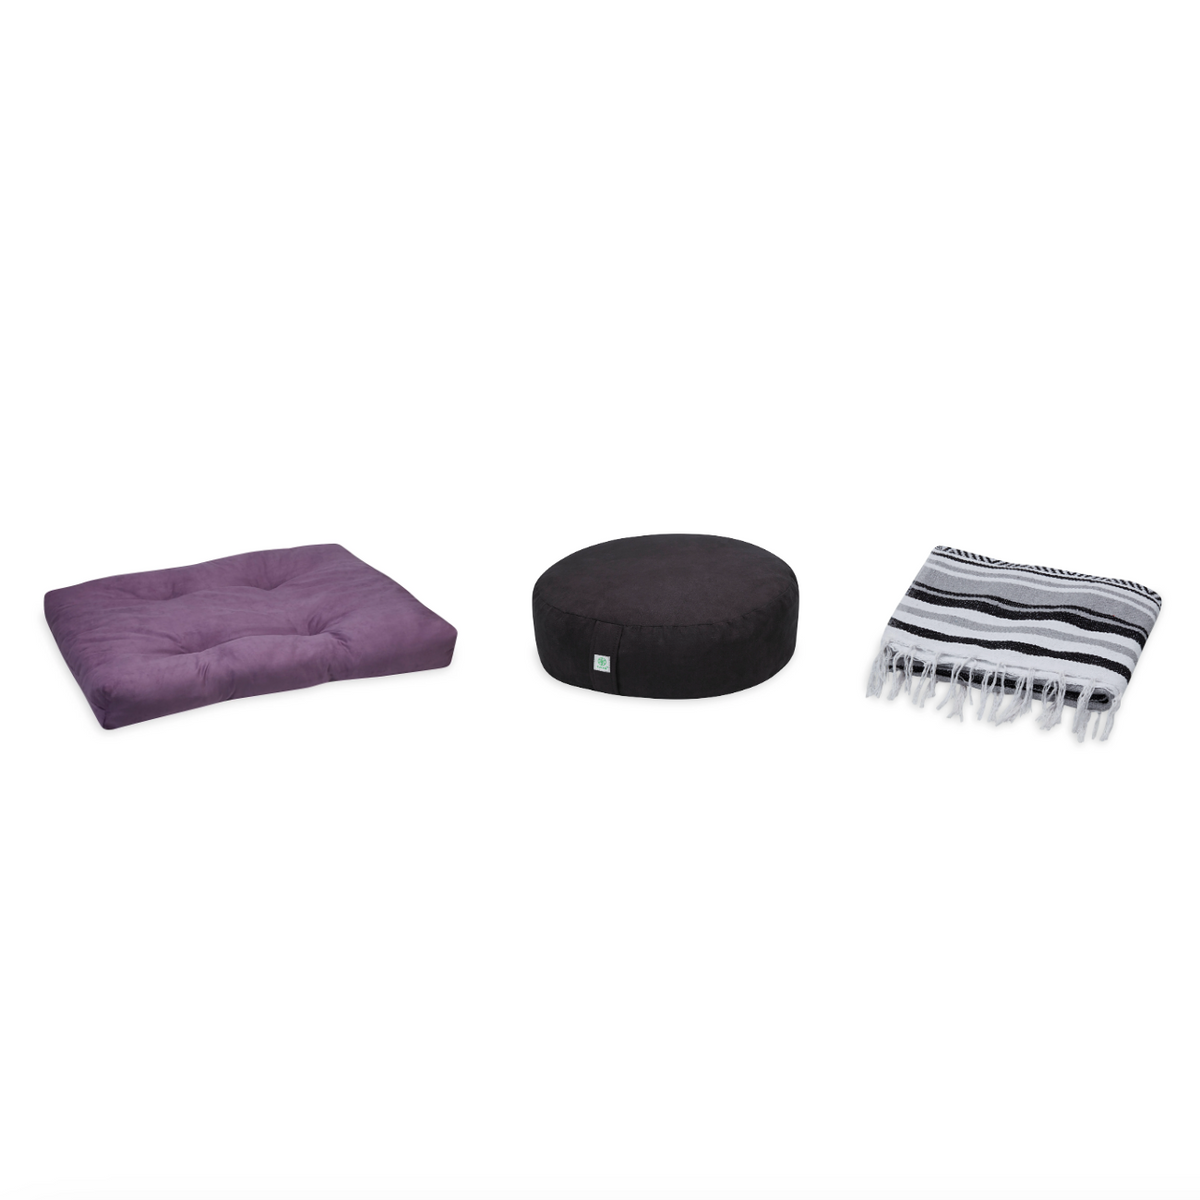 Meditation Bundle - Zabuton (Purple), Zafu (Black), Blanket (Black/Grey)